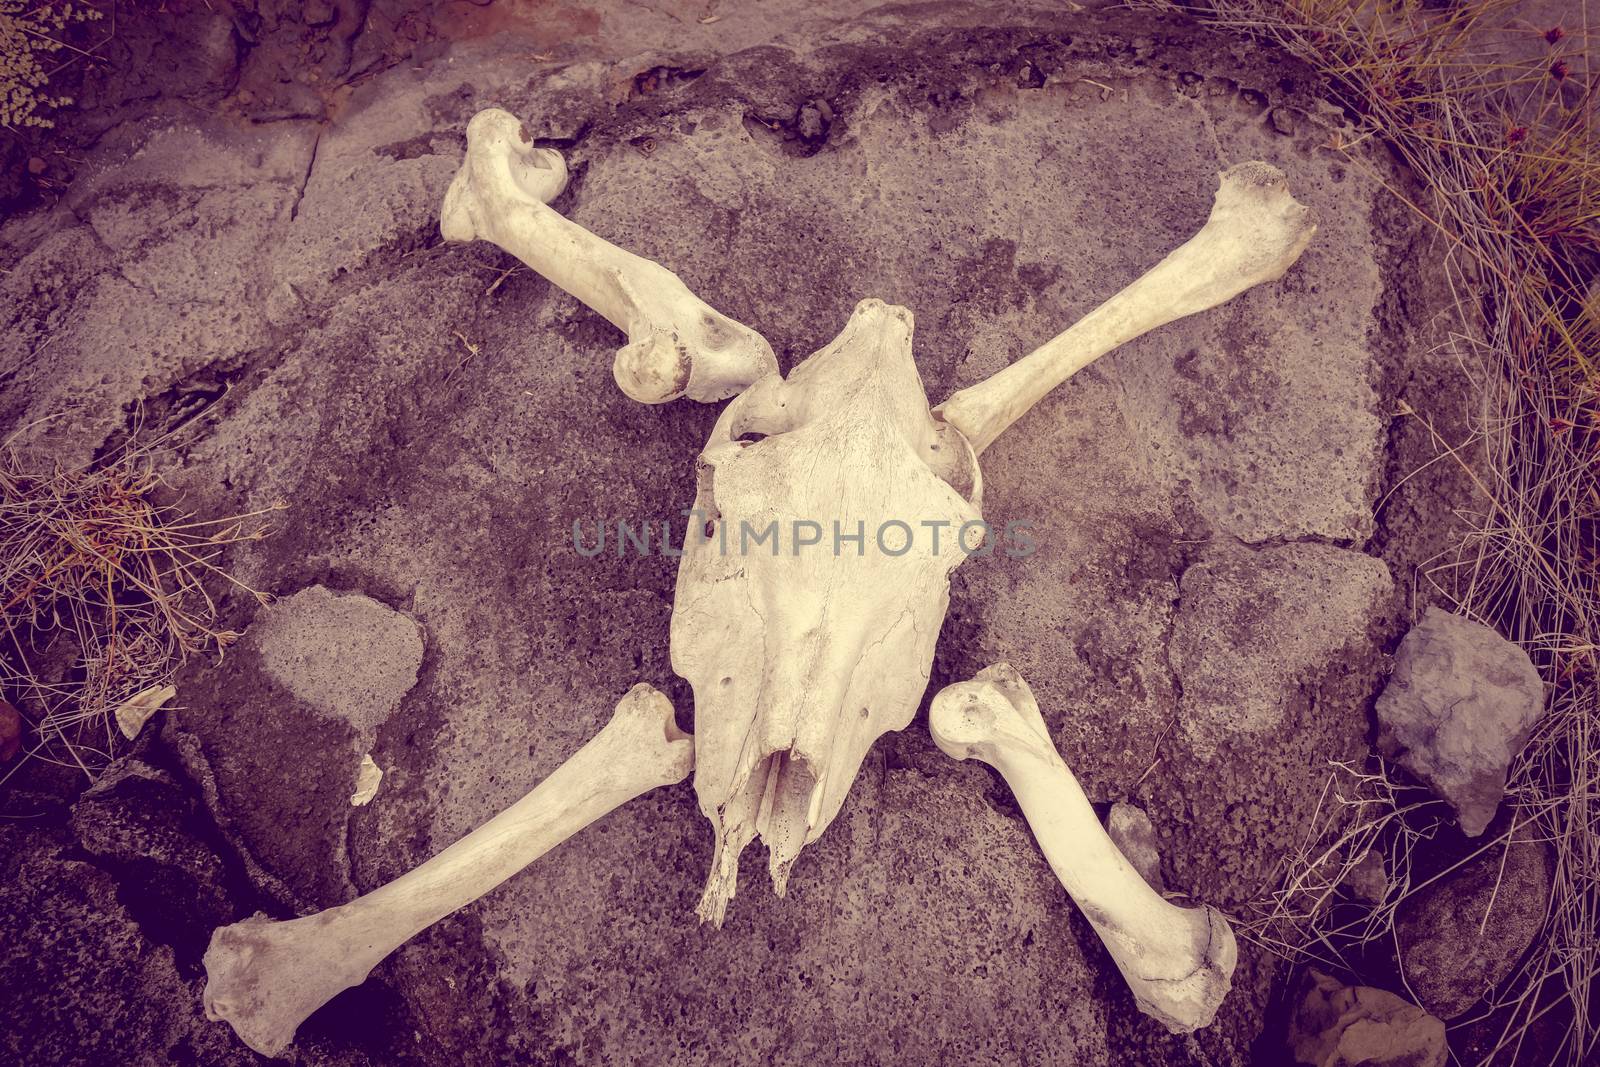 Horse skull and bones on easter island